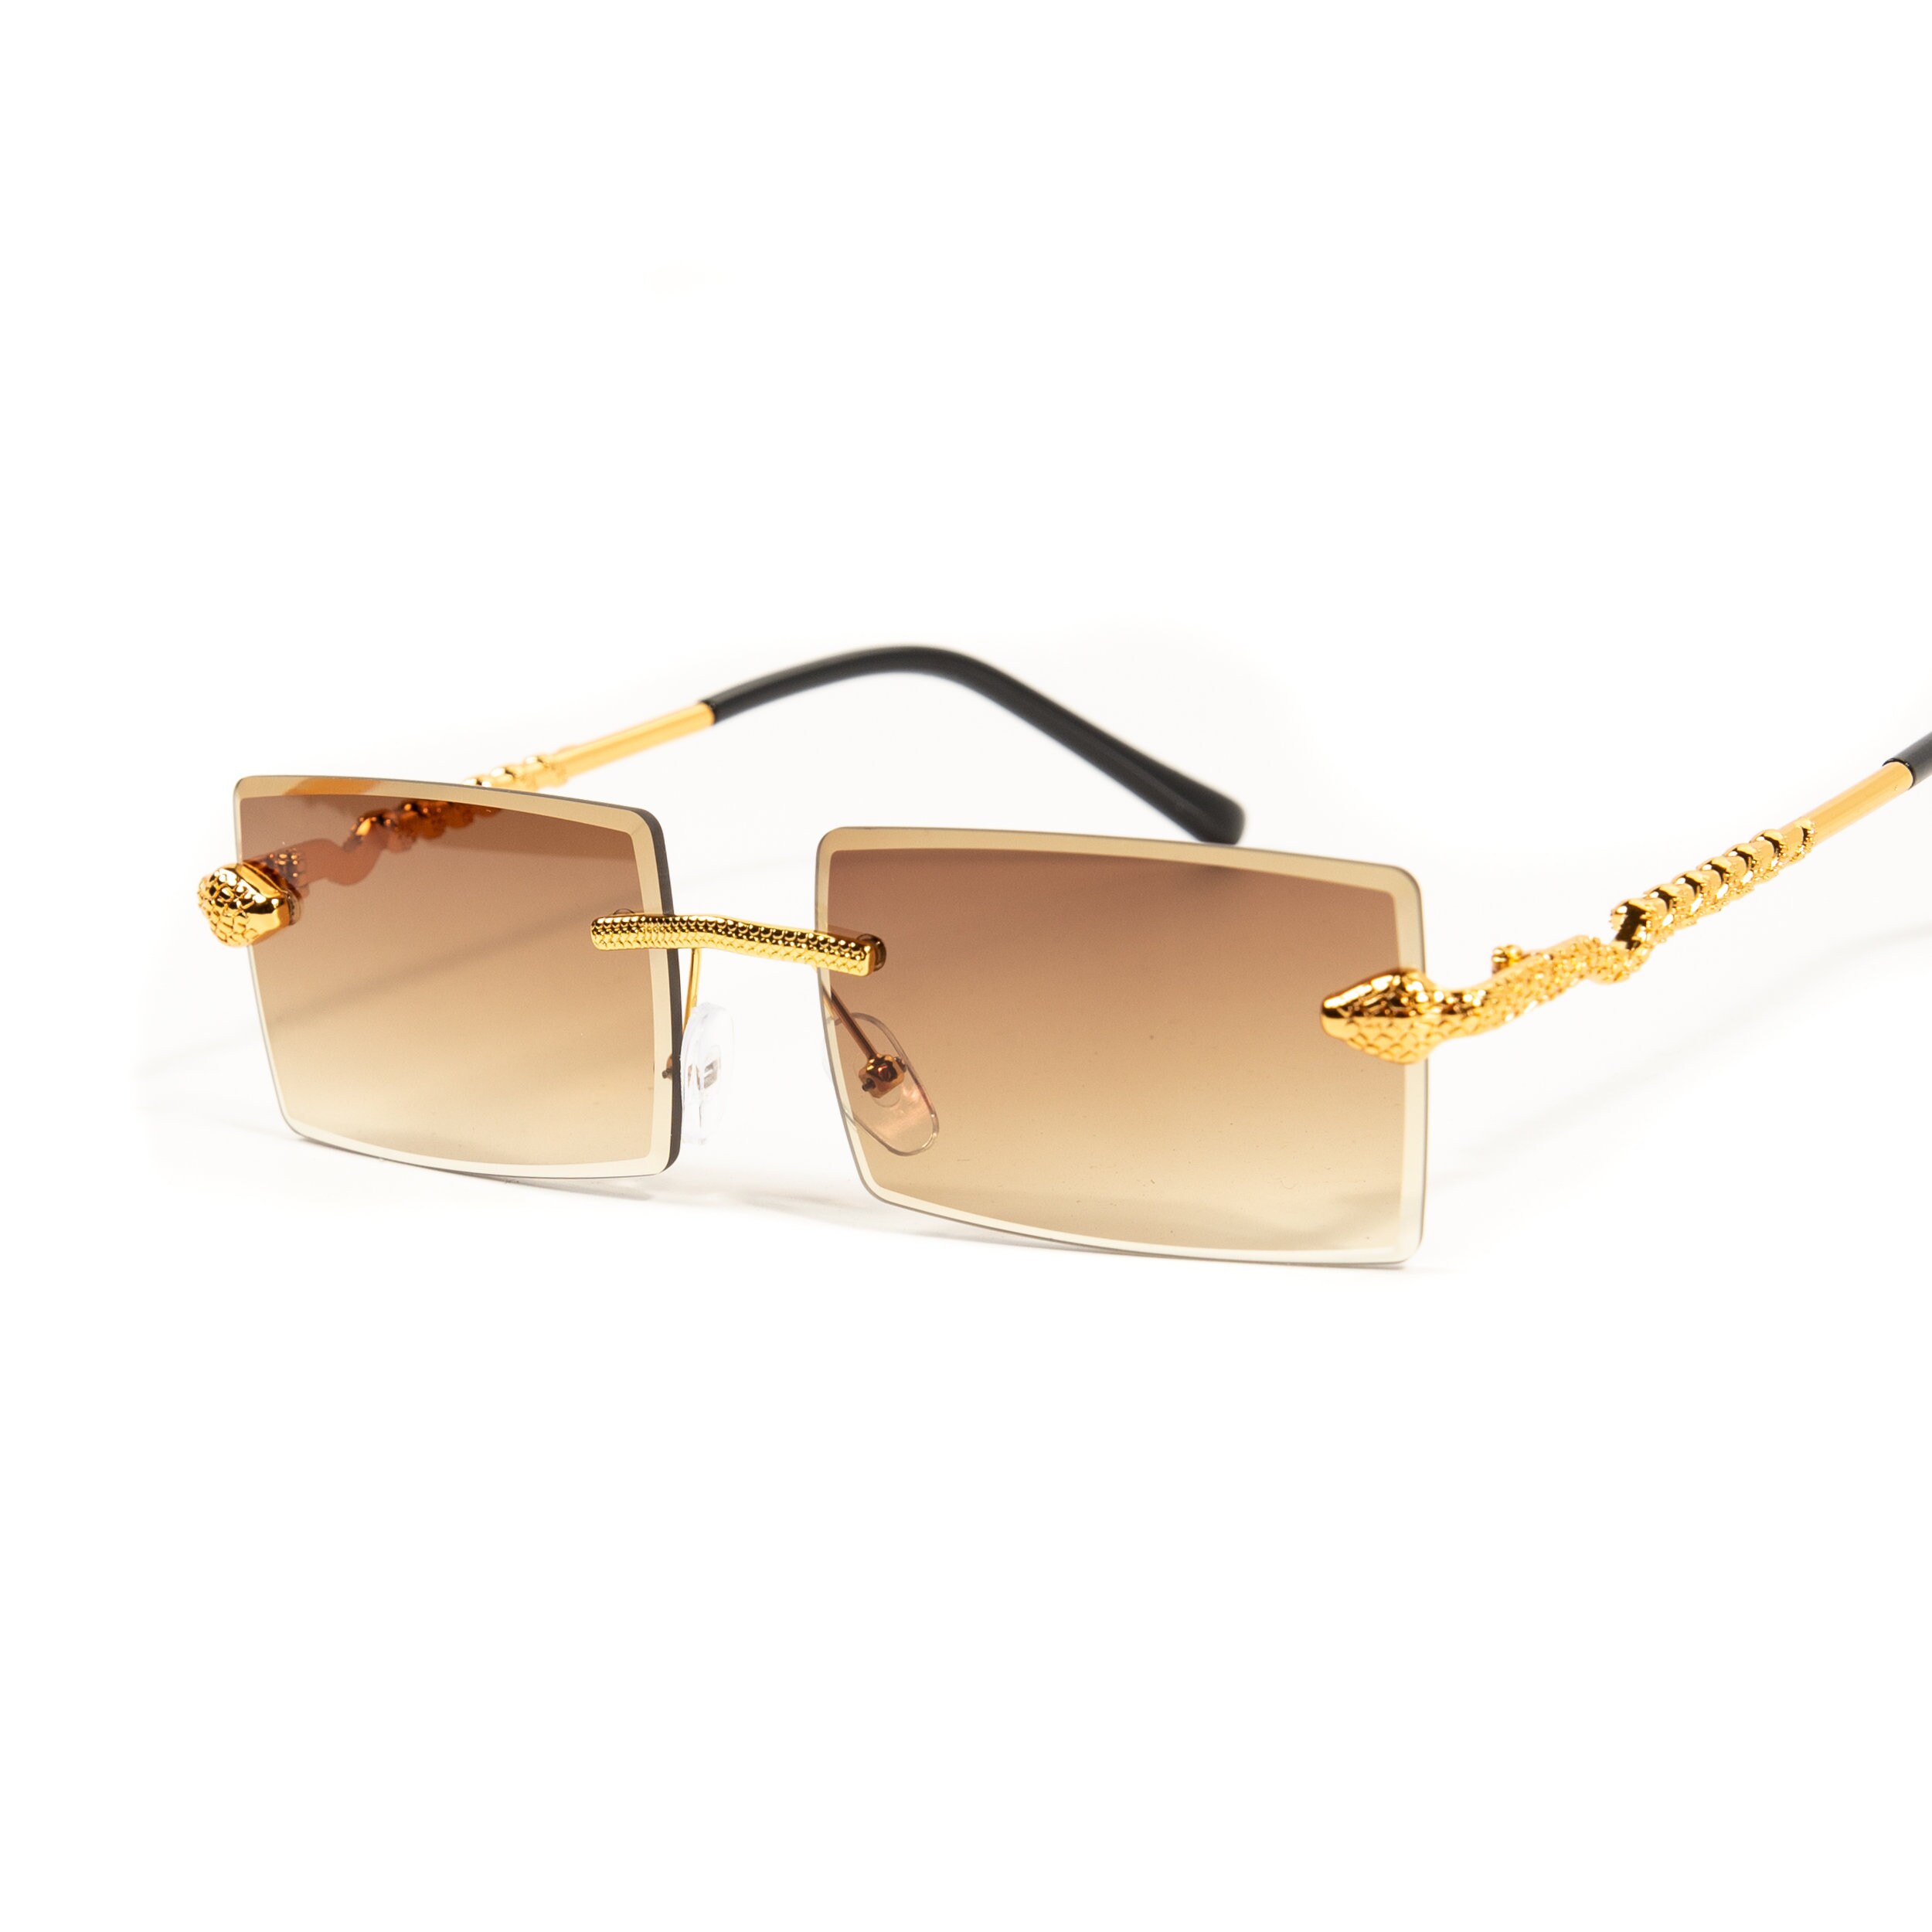 Men Clear Tinted Lens Eye Glasses Cristal Diamond Migos Shades Sunglasses